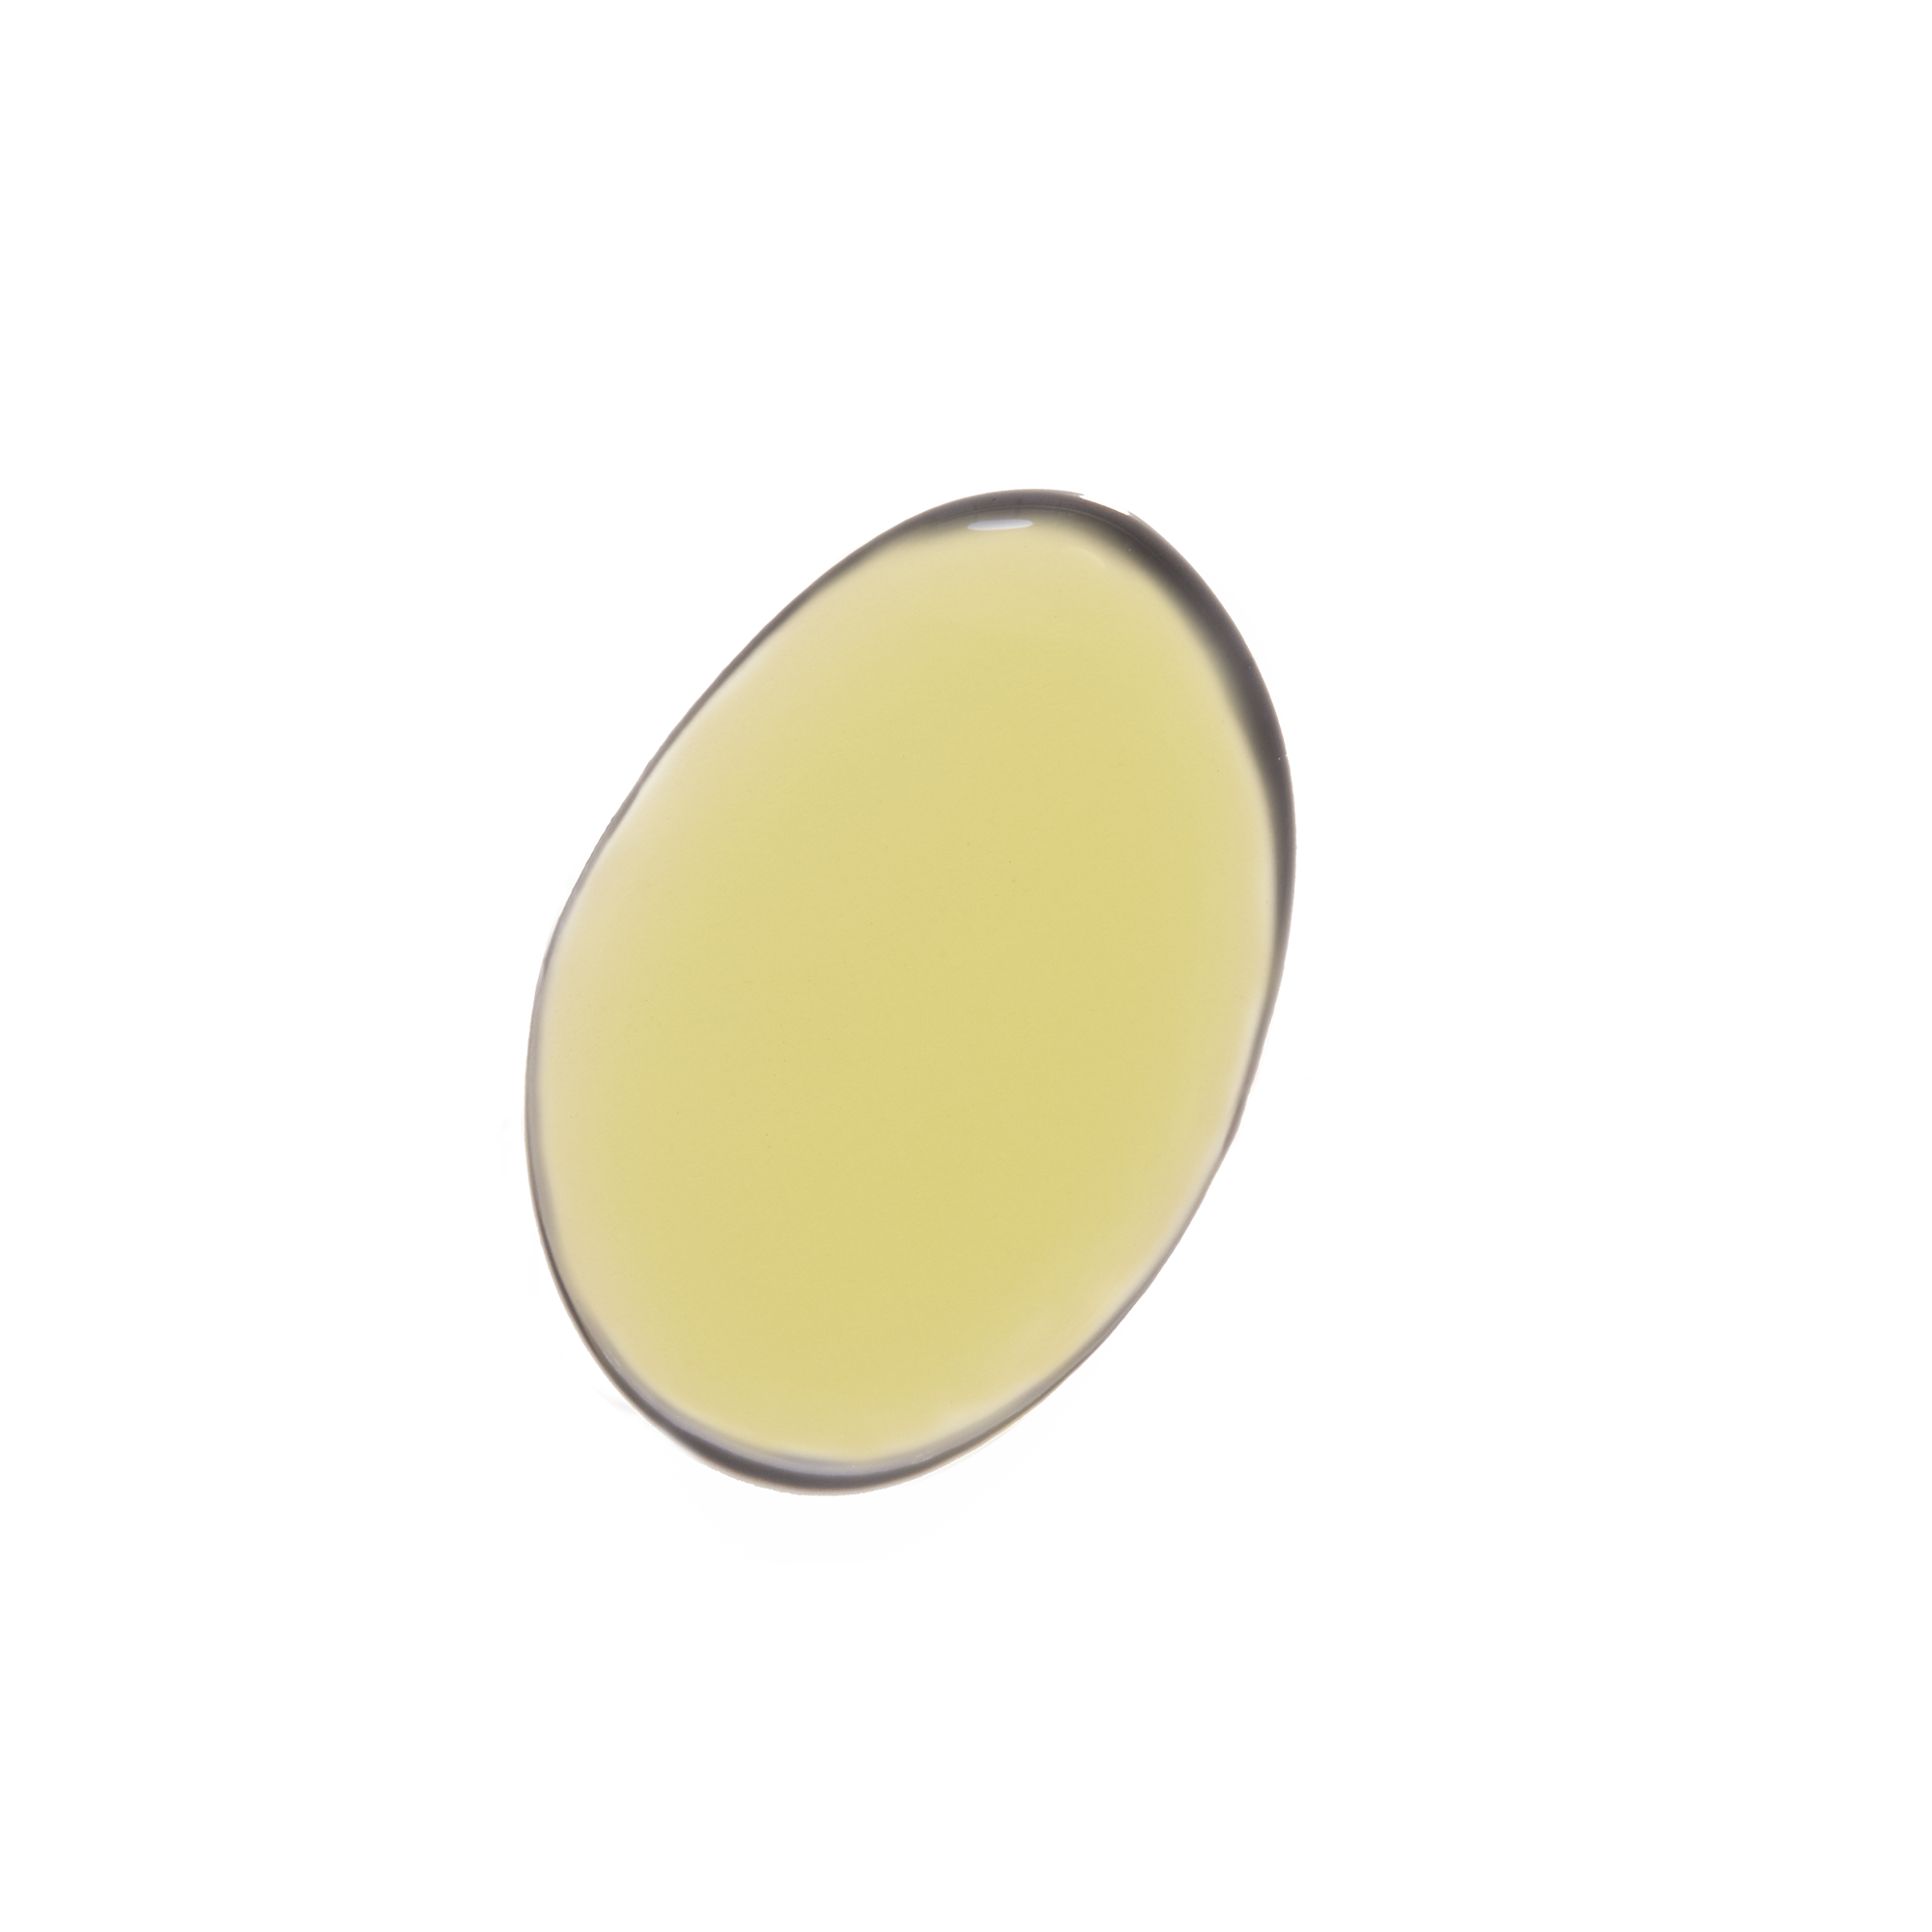 olive oil PEG-7 esters